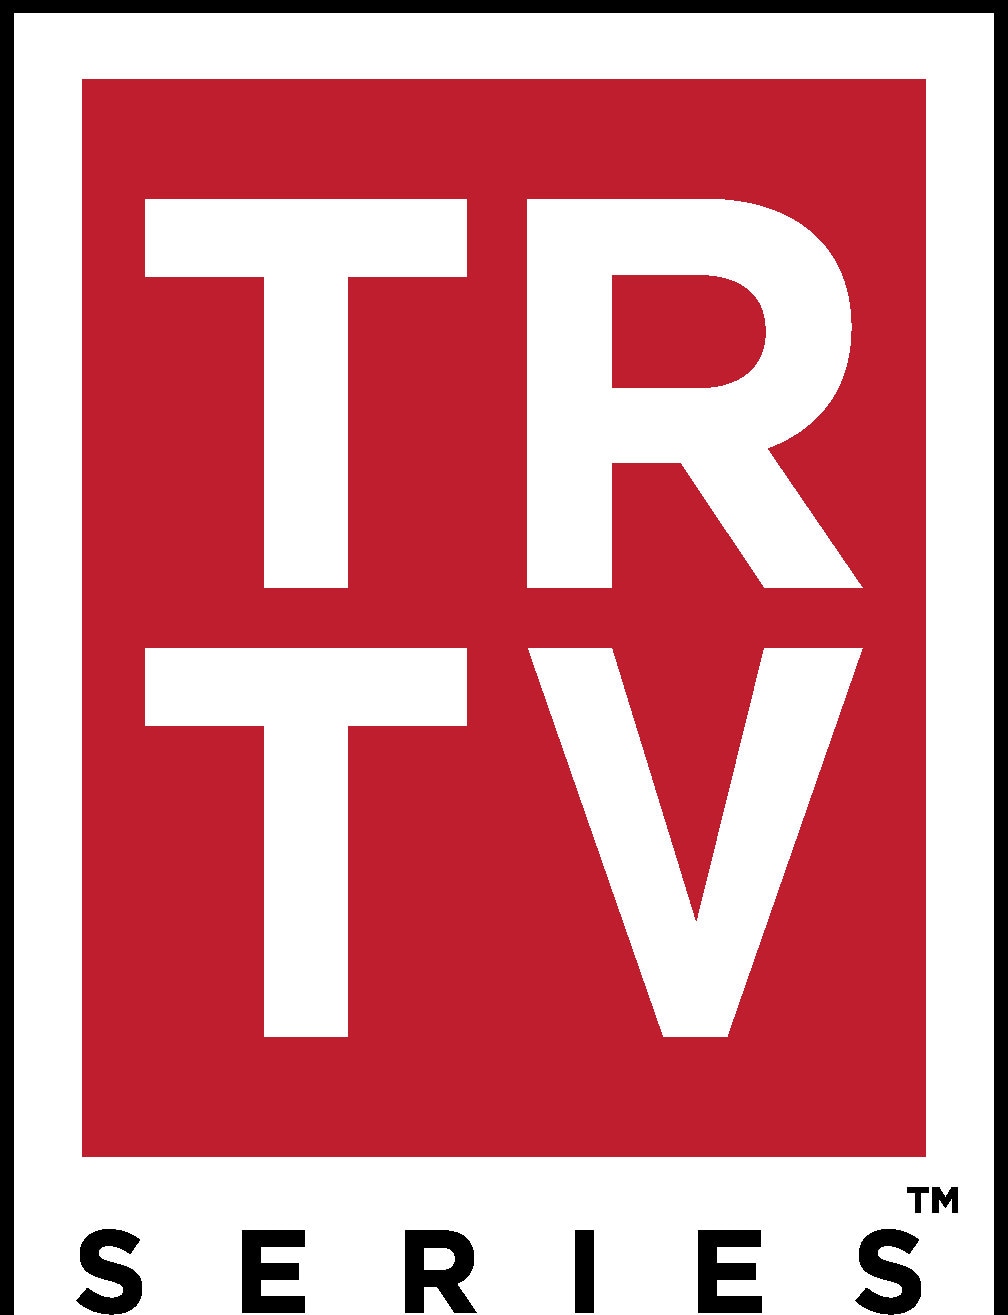 Carpisma The Crush Kivanc Tatlitug Tv Series *All Episodes* Original Actor Voices with English Subtitles | Turkish Drama Series Streaming